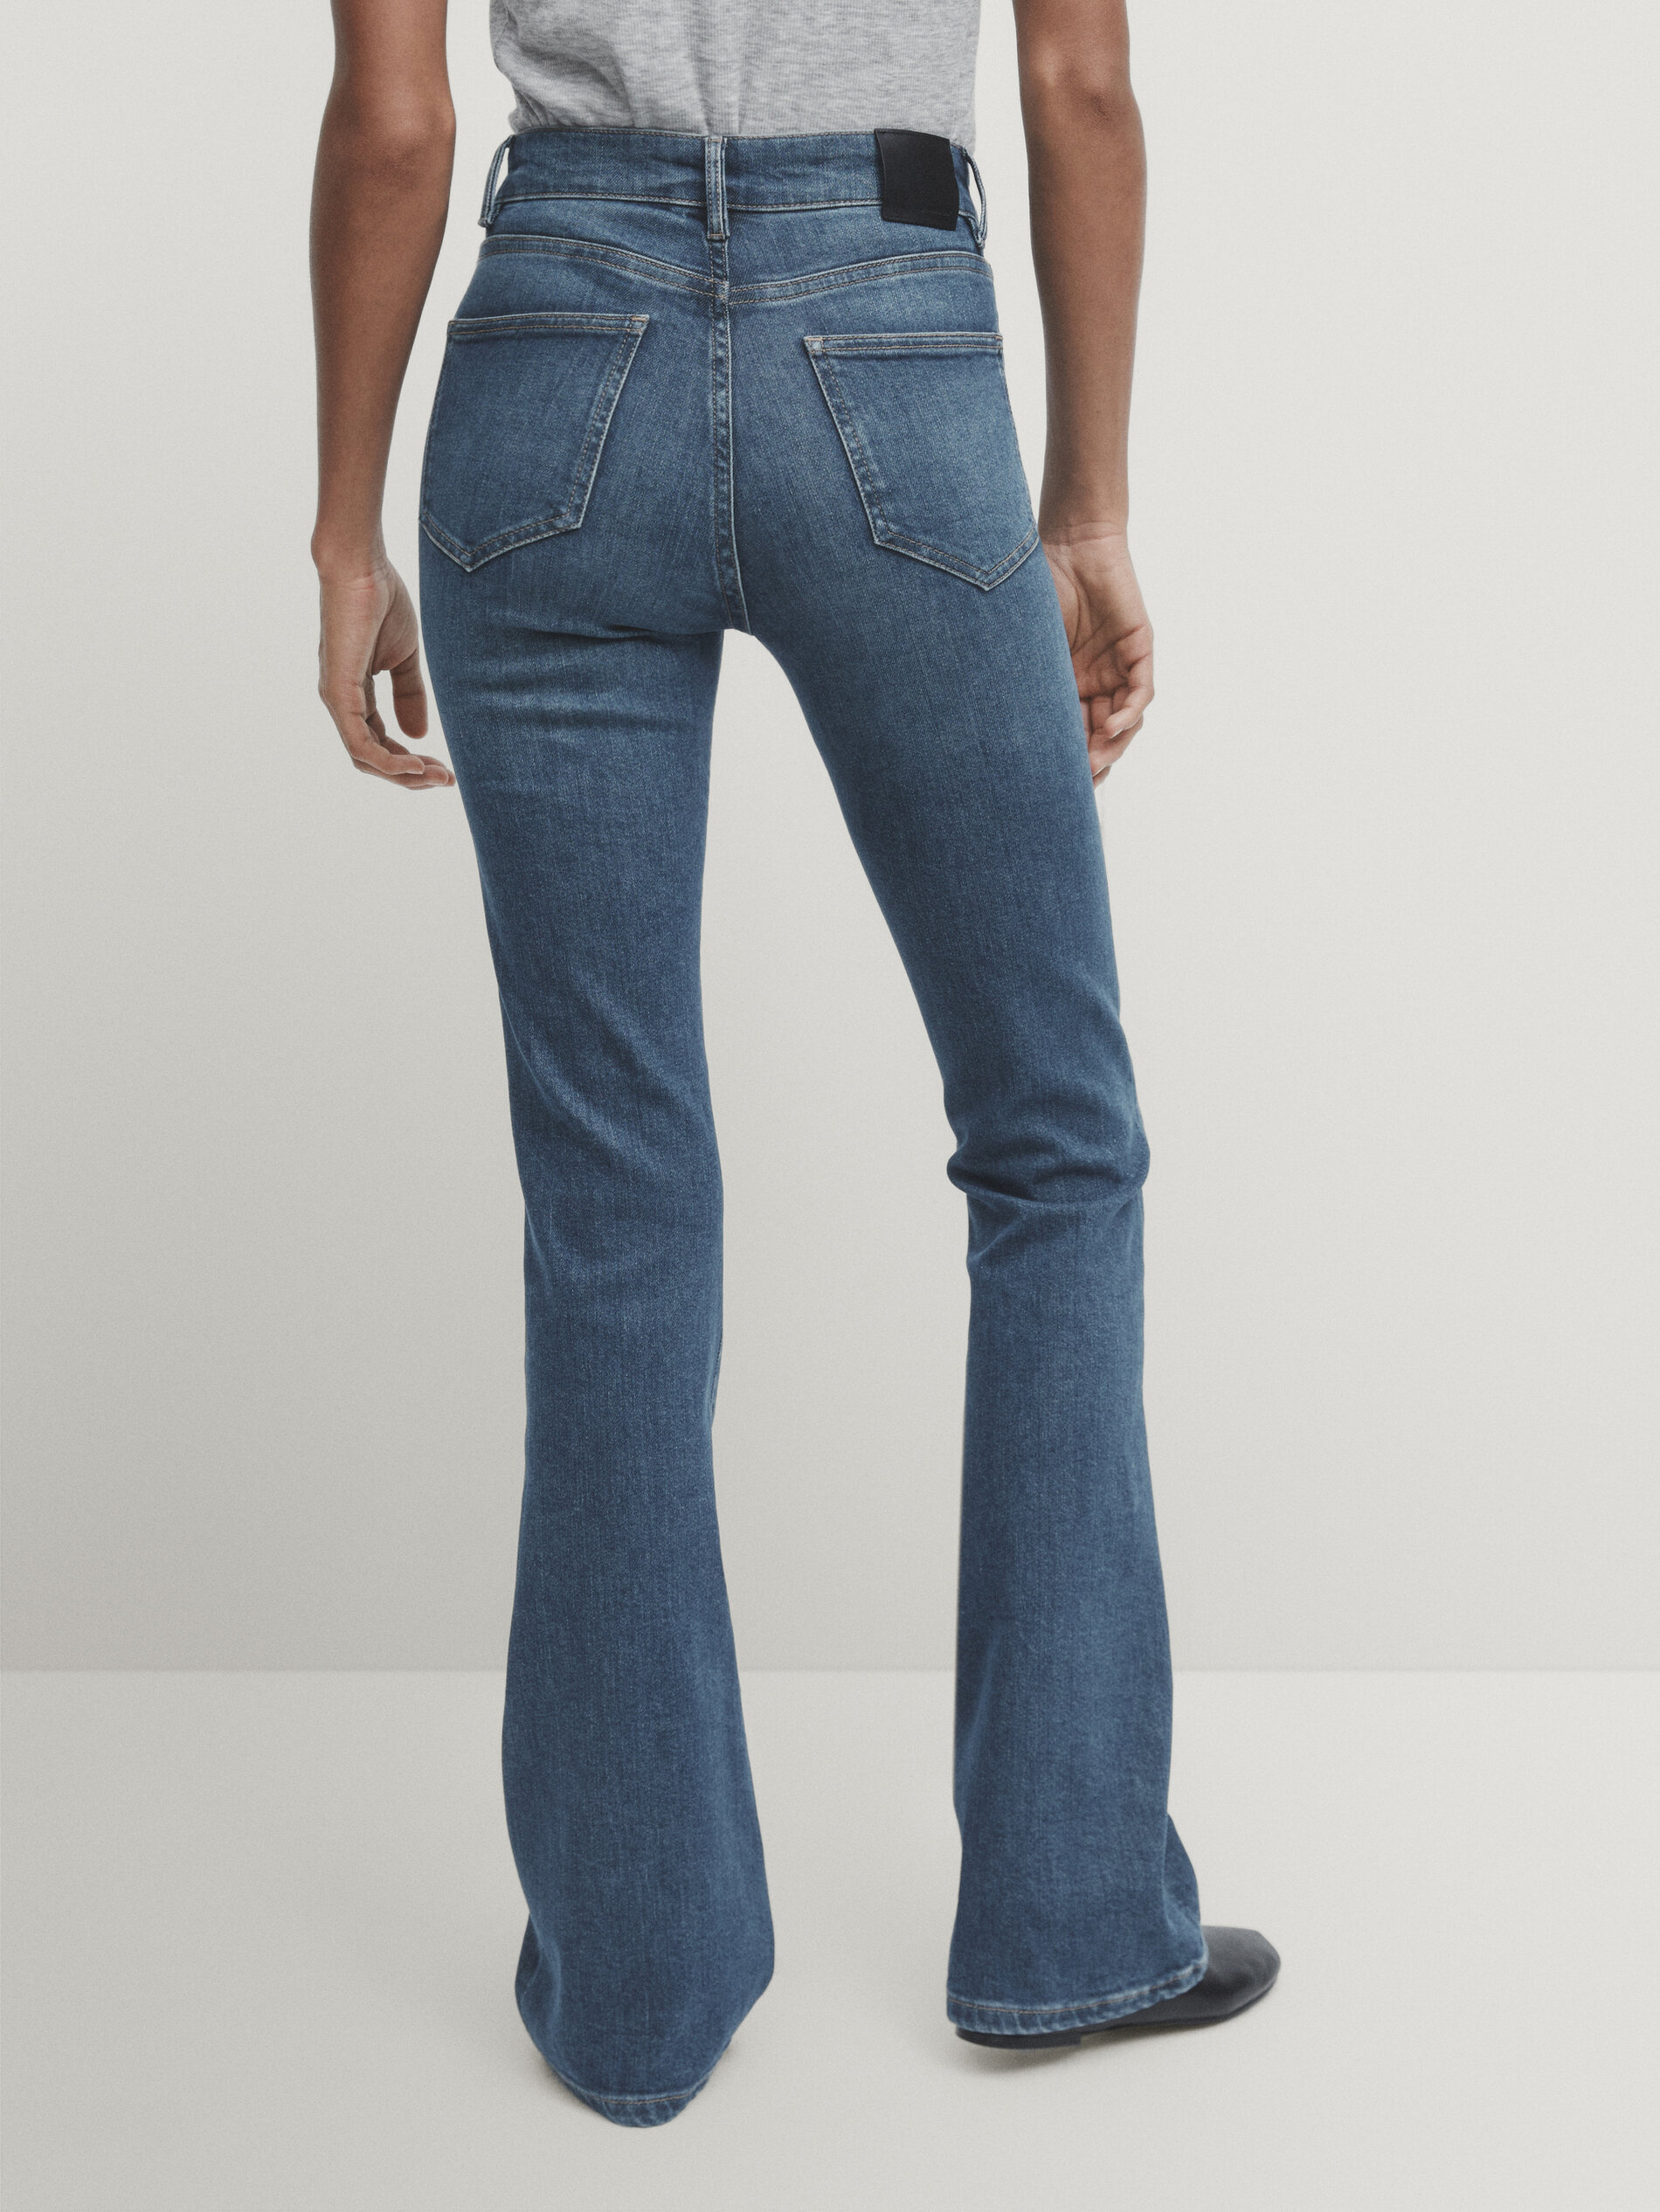 Jeans tiro alto skinny flare